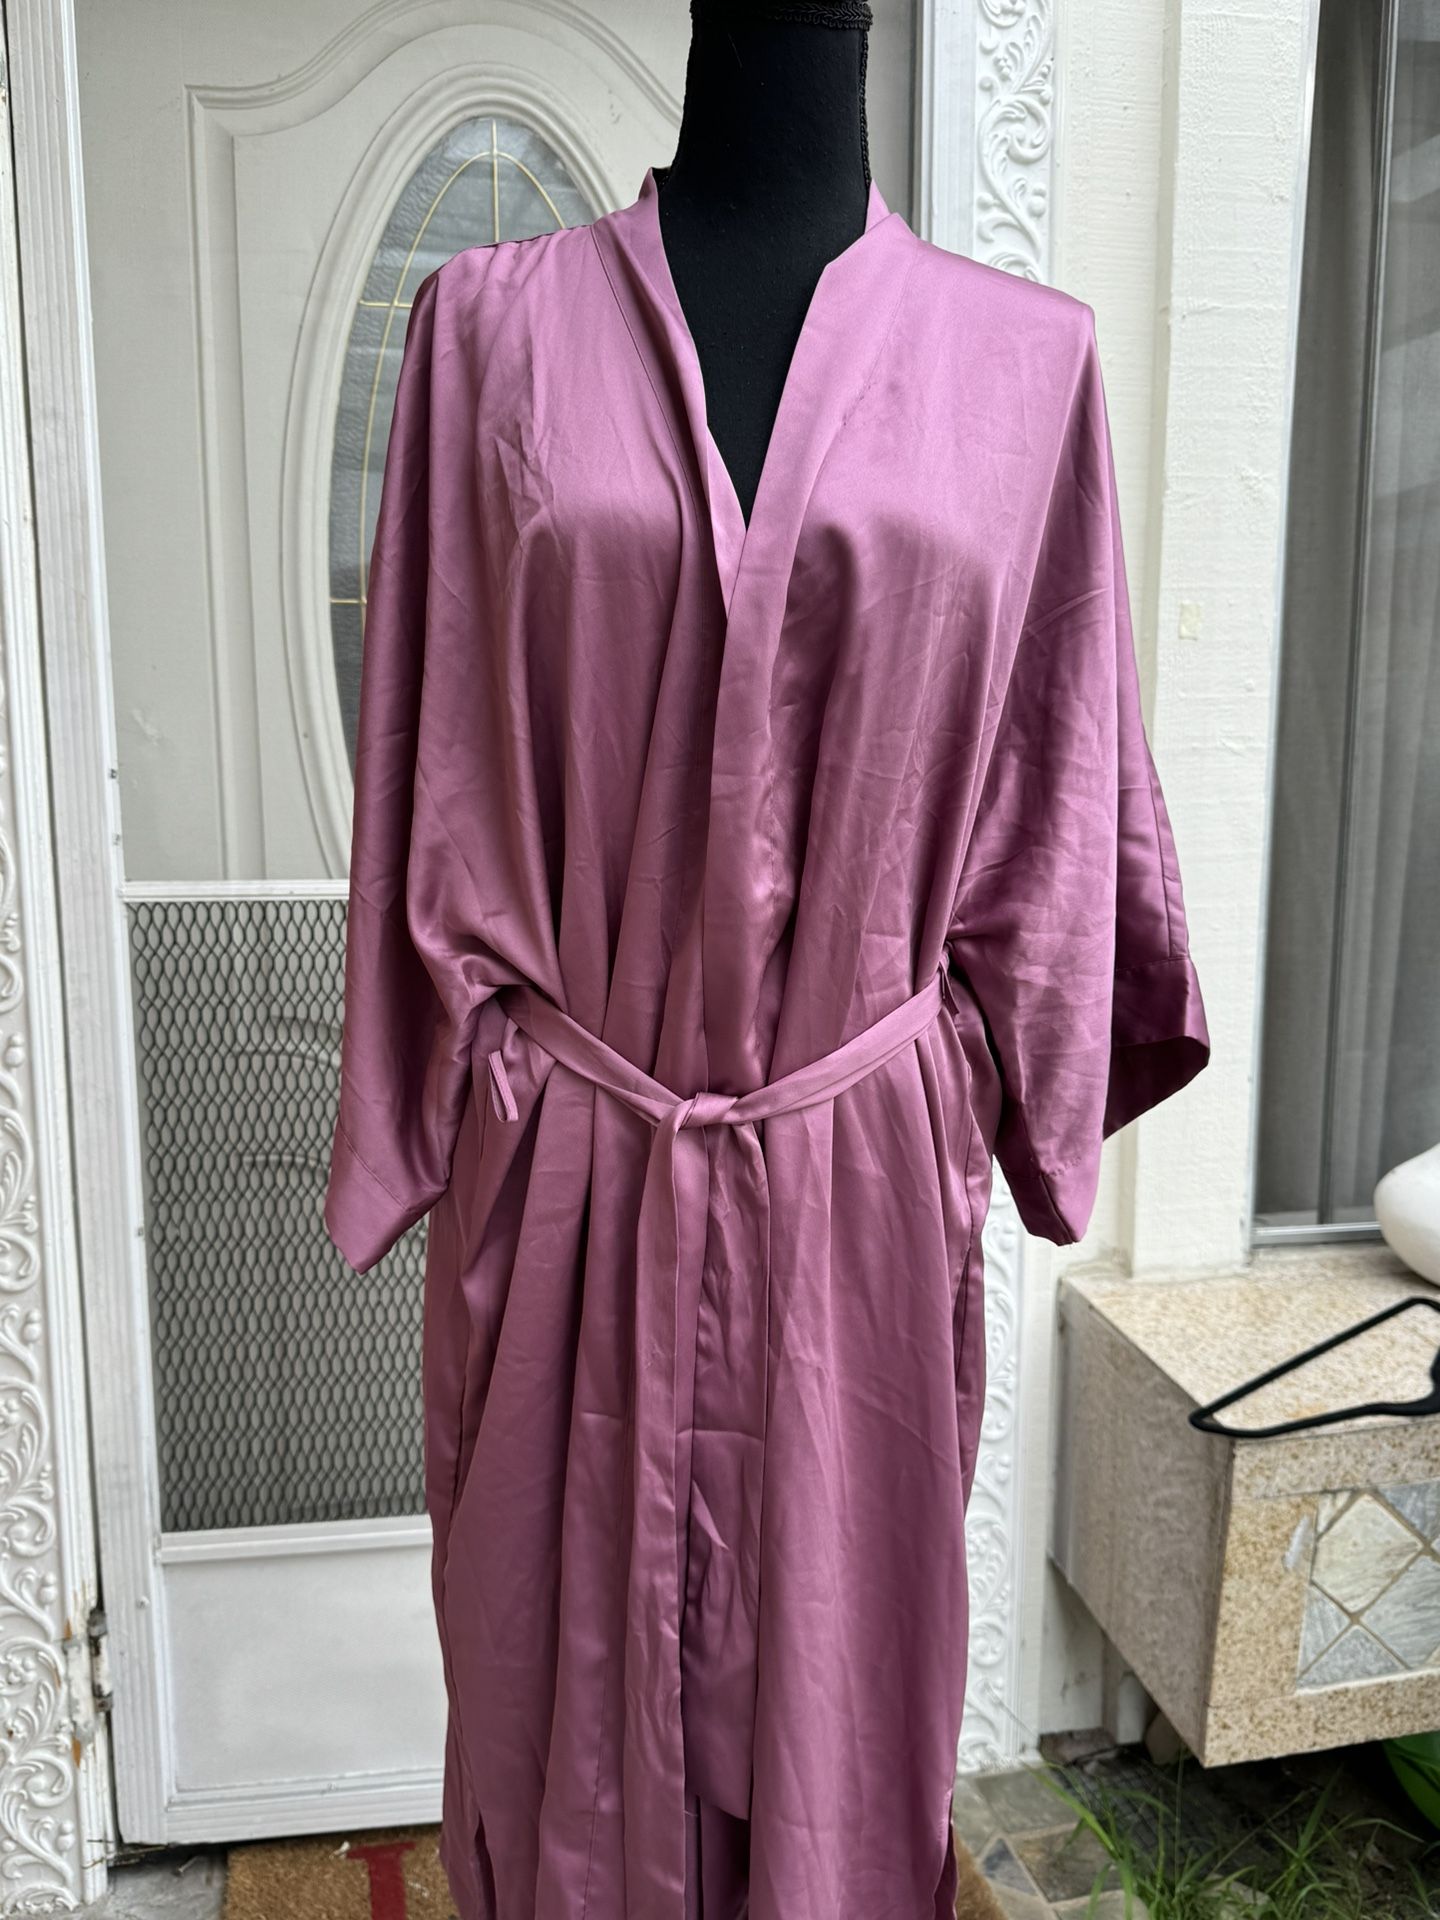 Victoria's Secret Women's Satin Robe Sleepwear